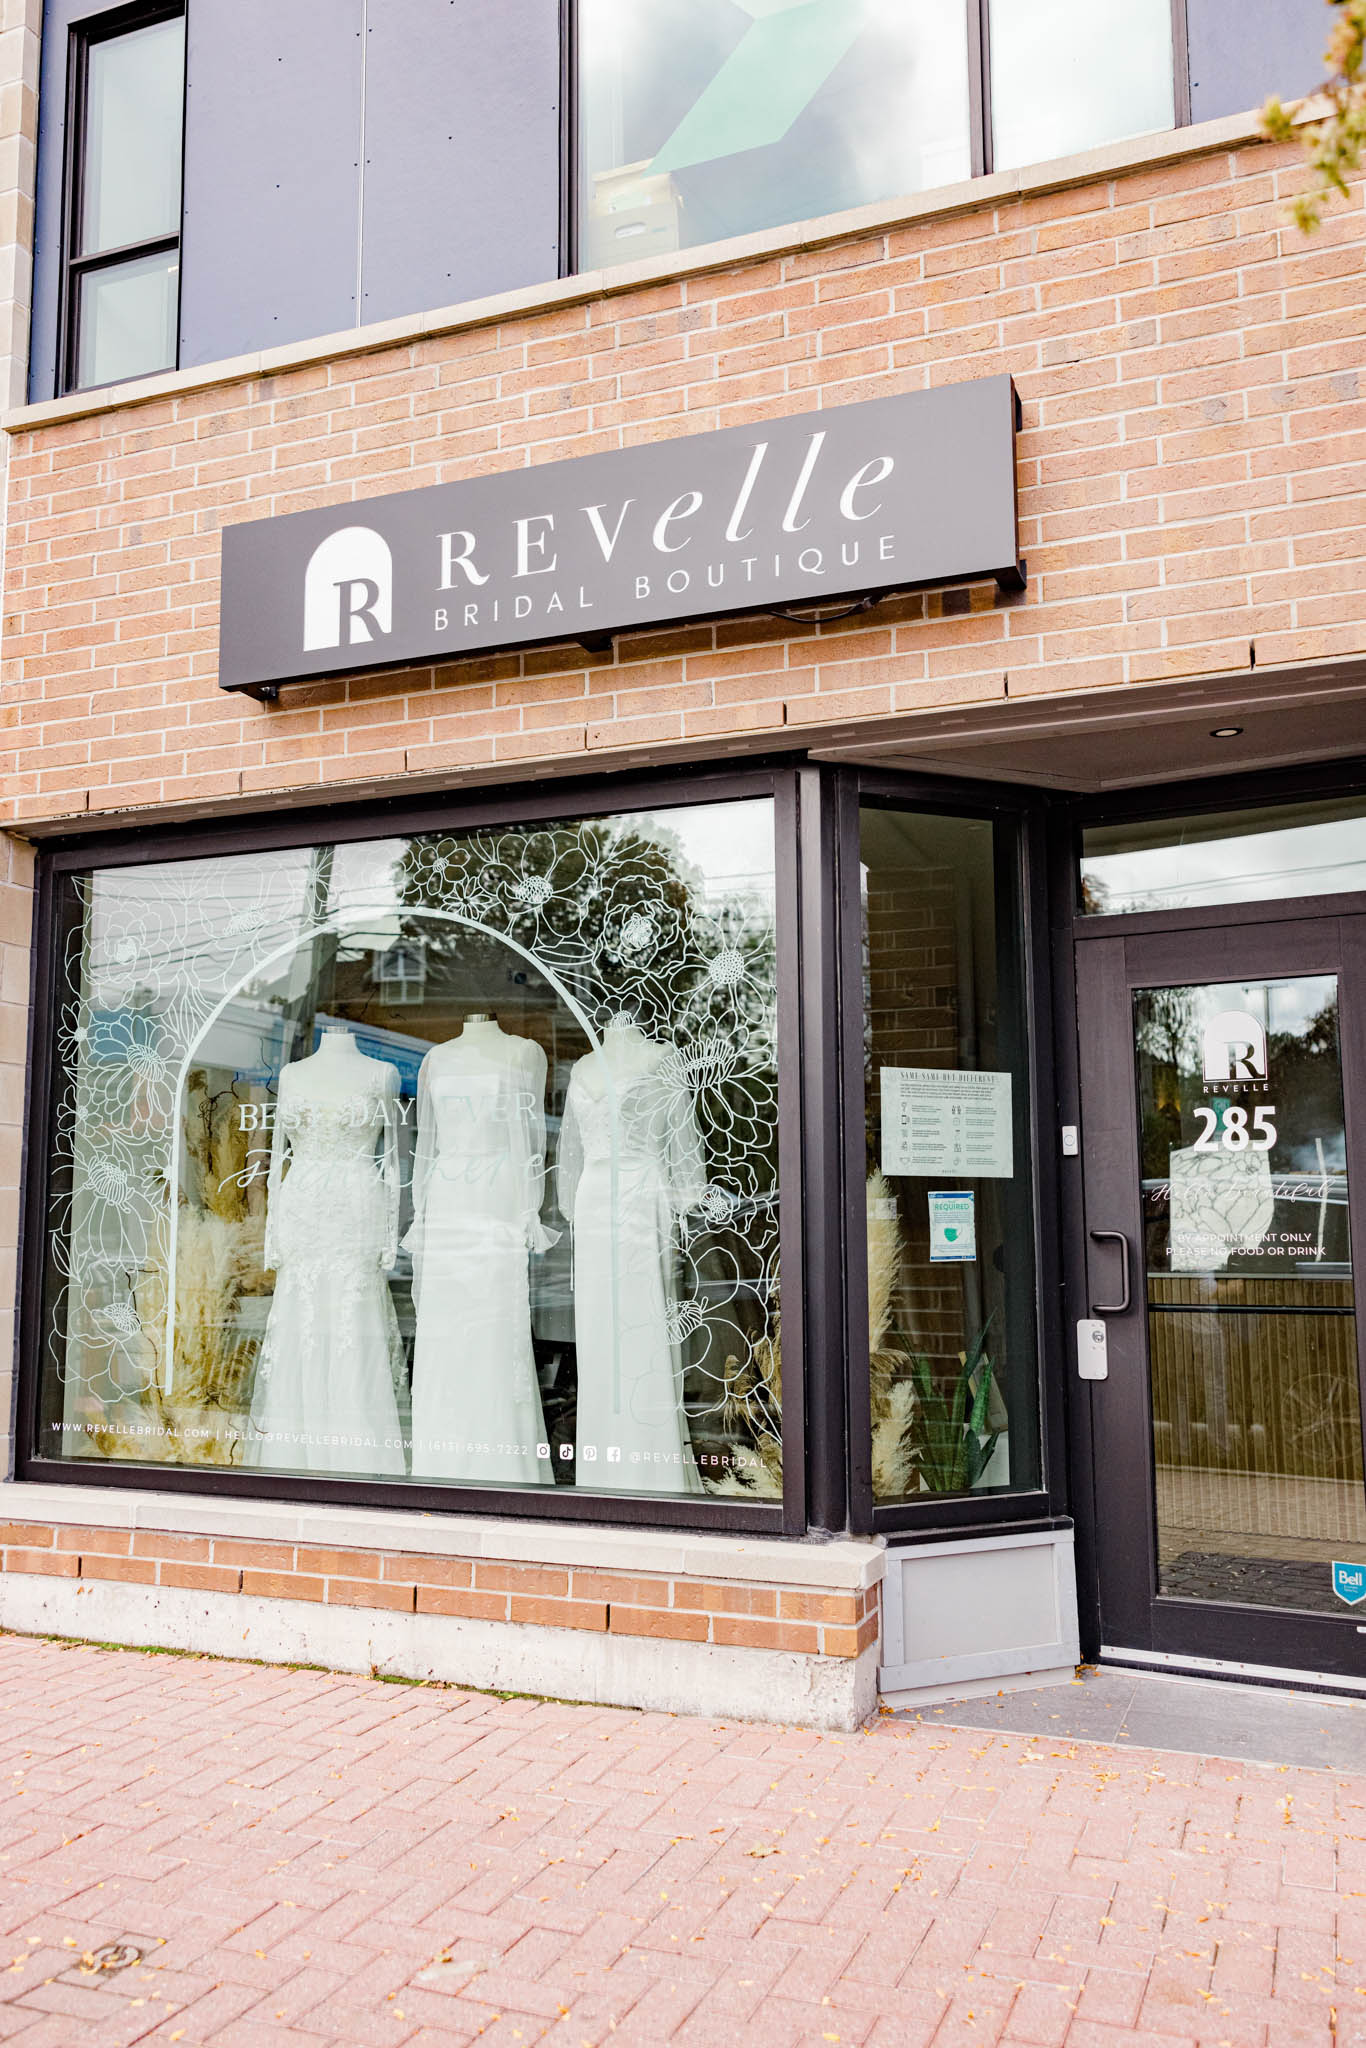 Revelle Bridal Boutique Street View Facade Window Entrance by Grey Loft Studio